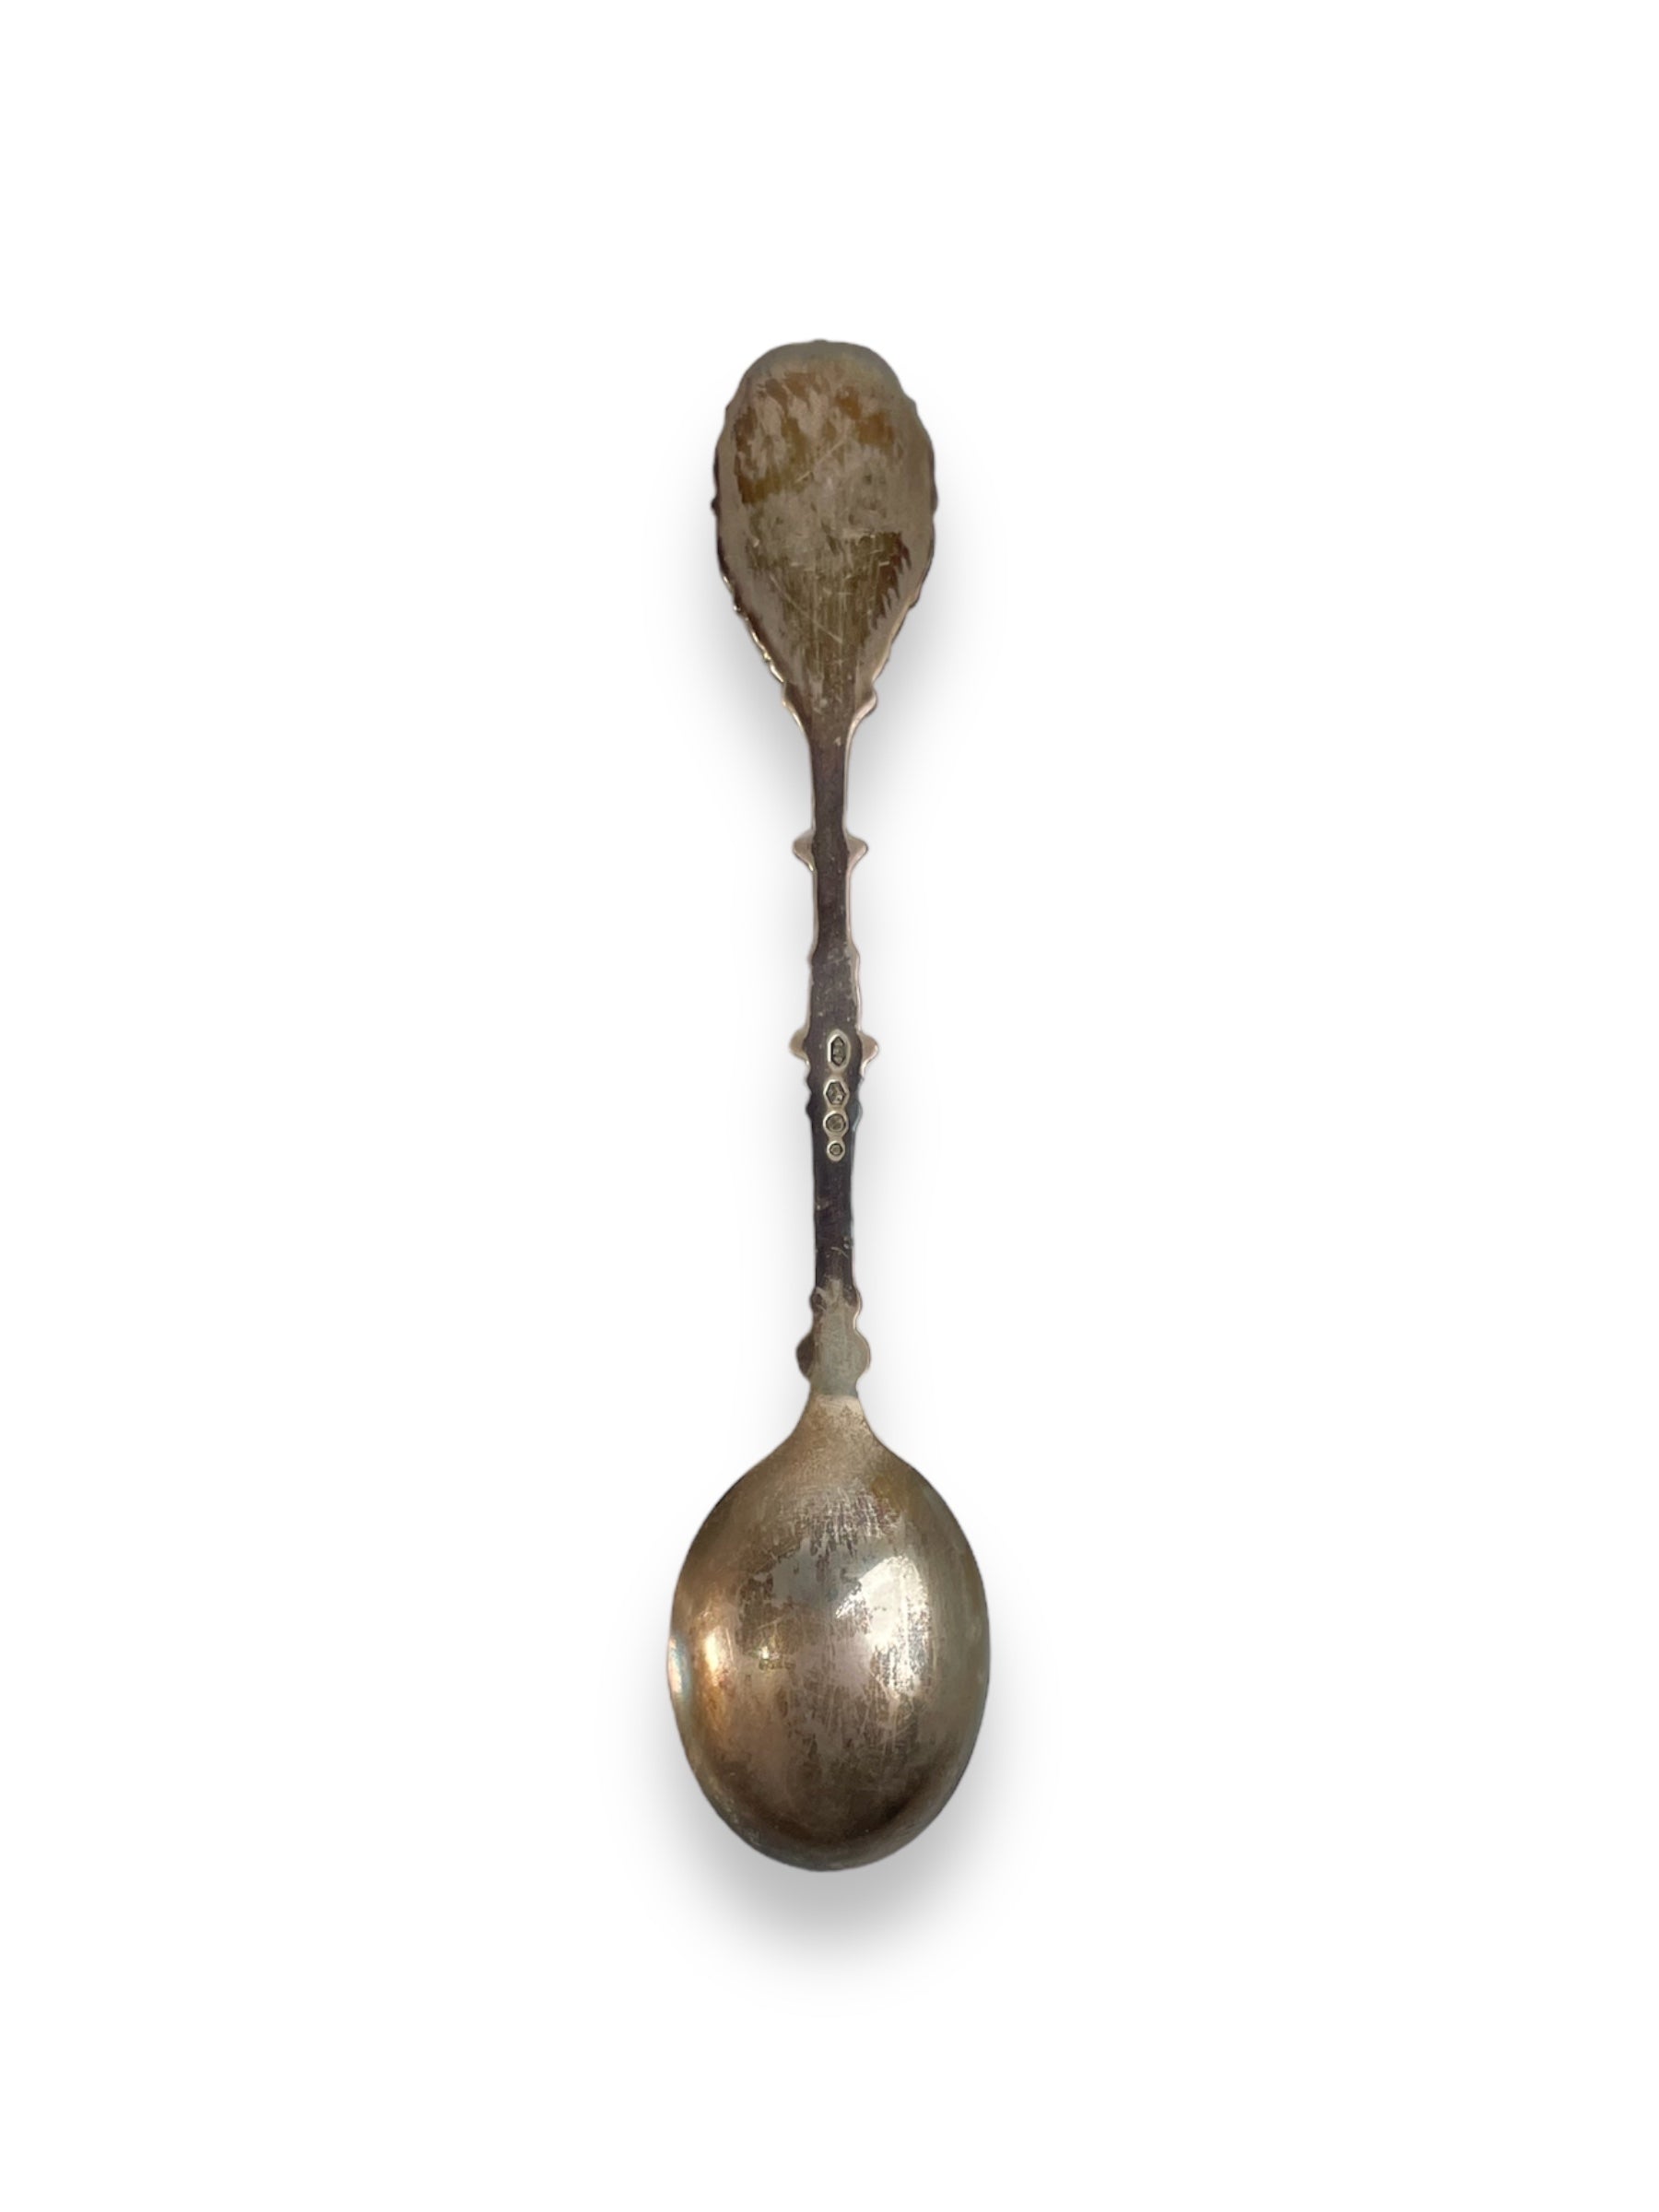 Antique Collectible Sterling Souvenir Spoon